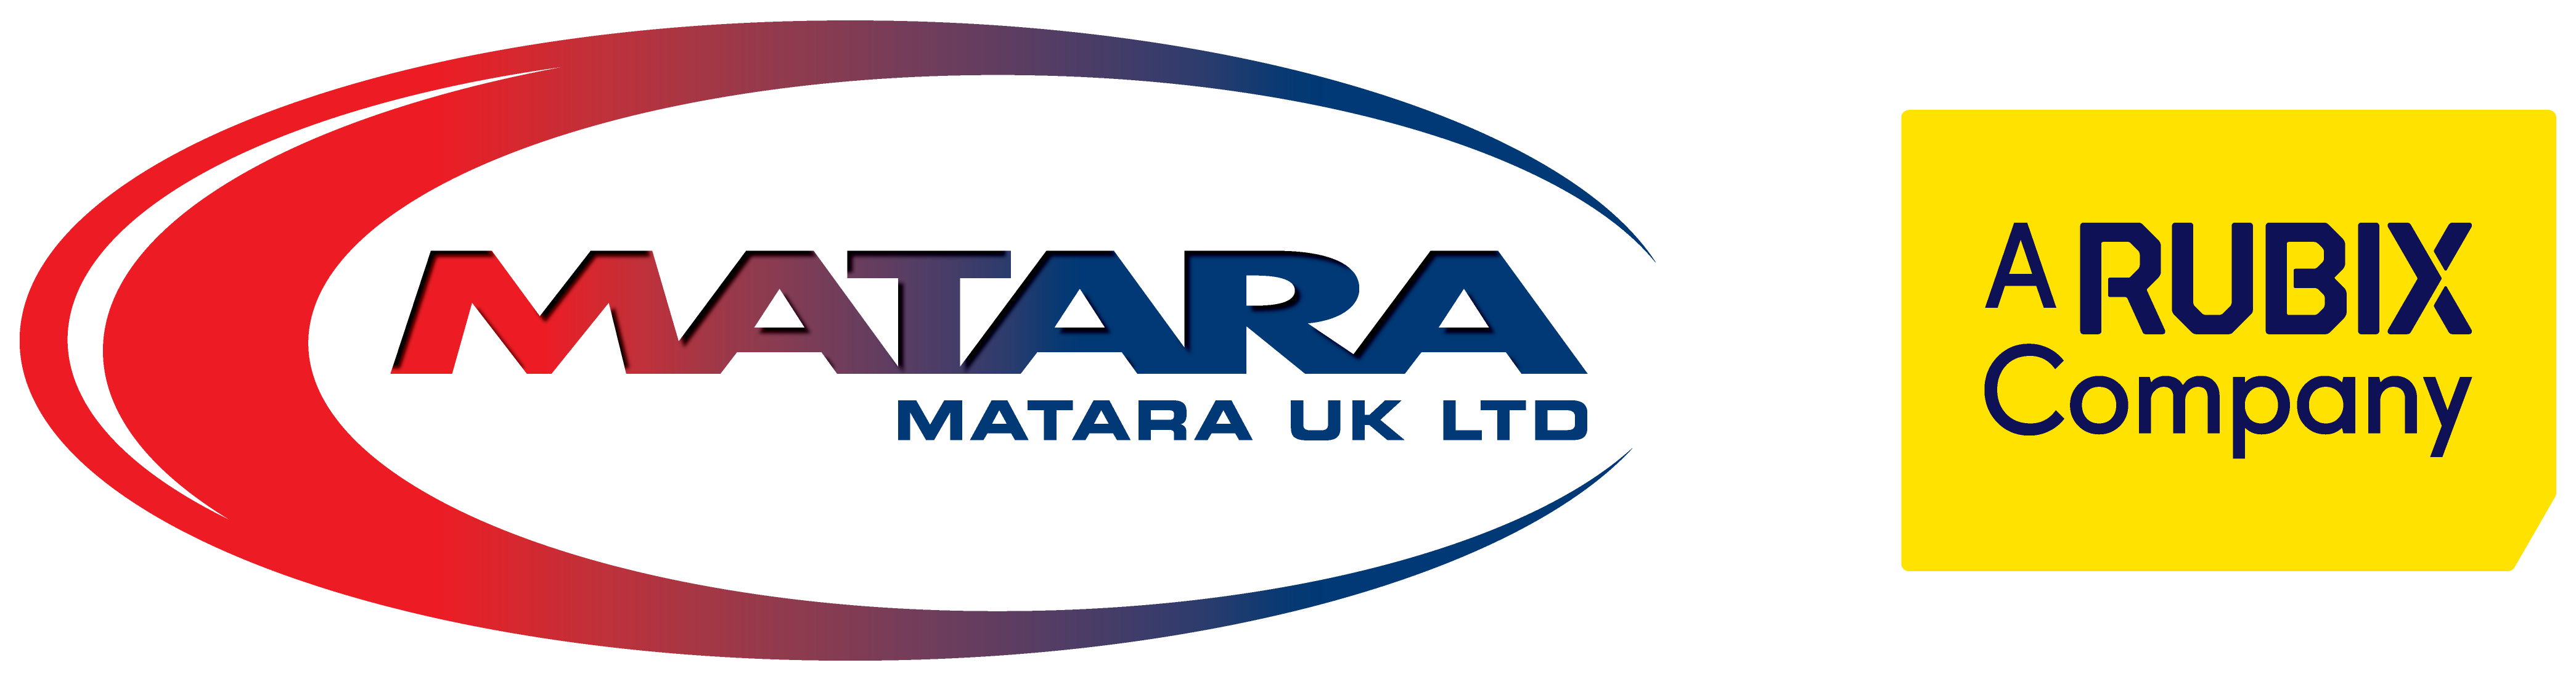 Matara UK Ltd - A Rubix Company